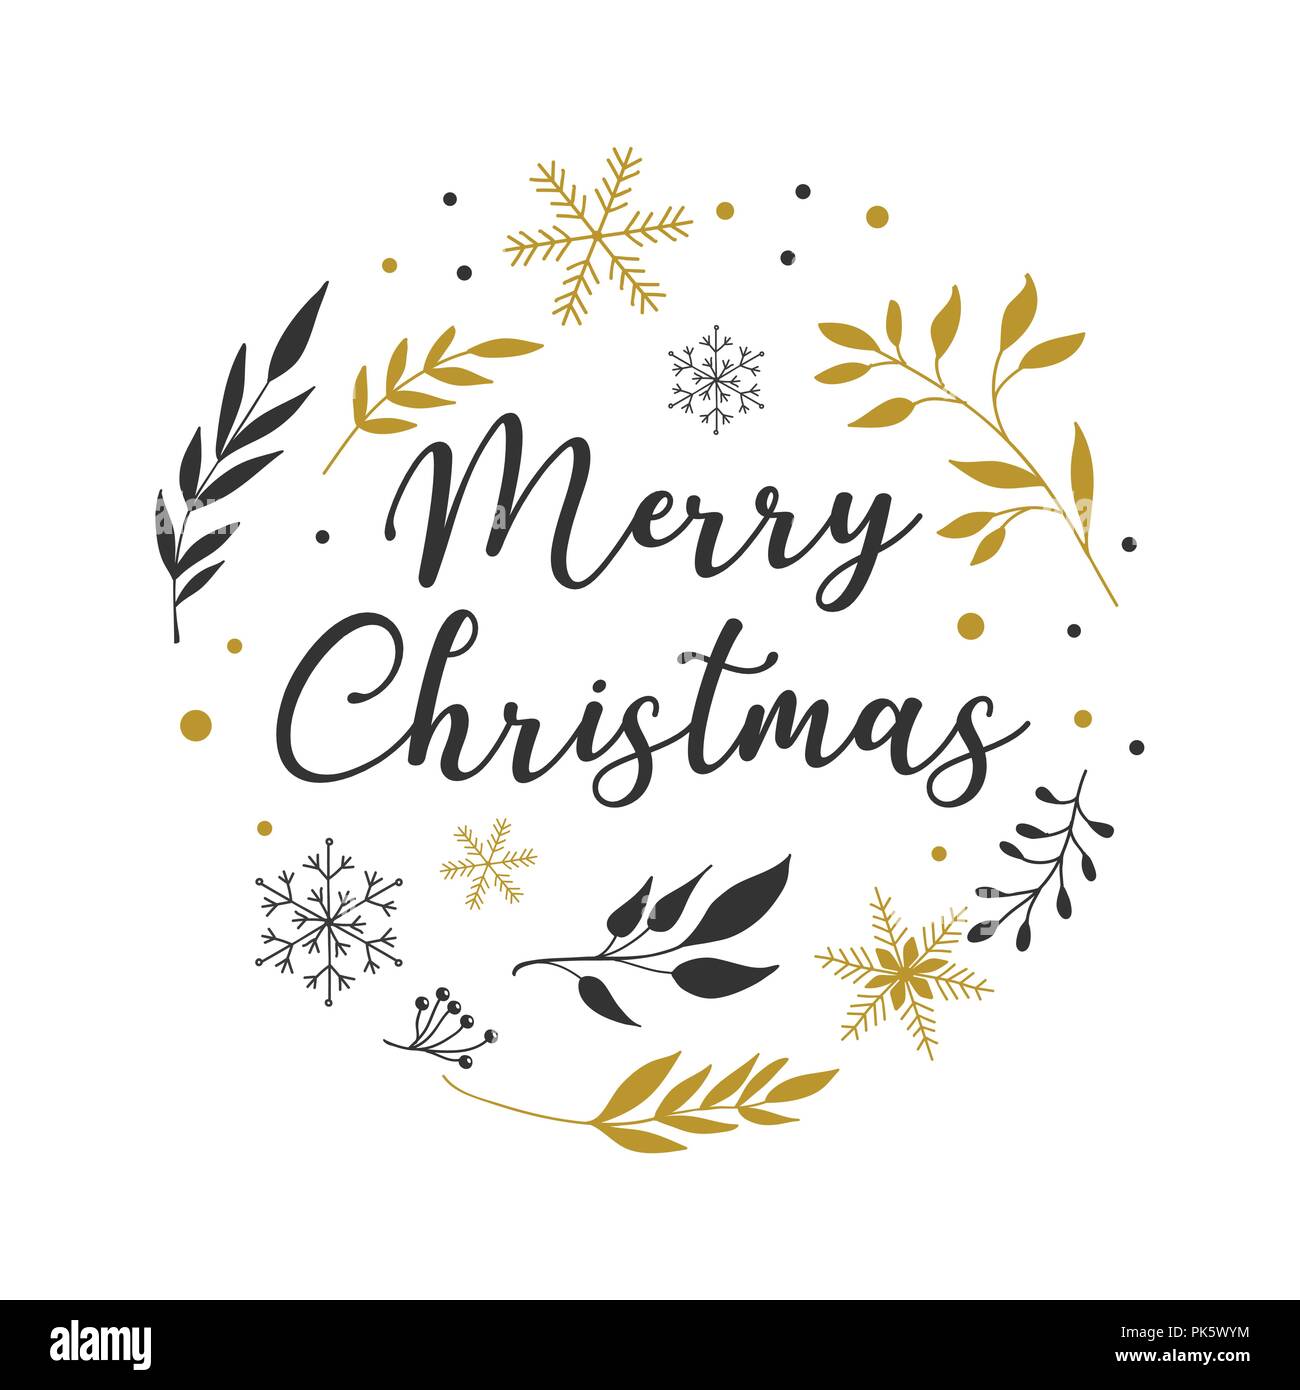 Printable Wall Art Cardboard Background Christmas Typography Quote Christmas quote Christmas Decor Peace Love Joy